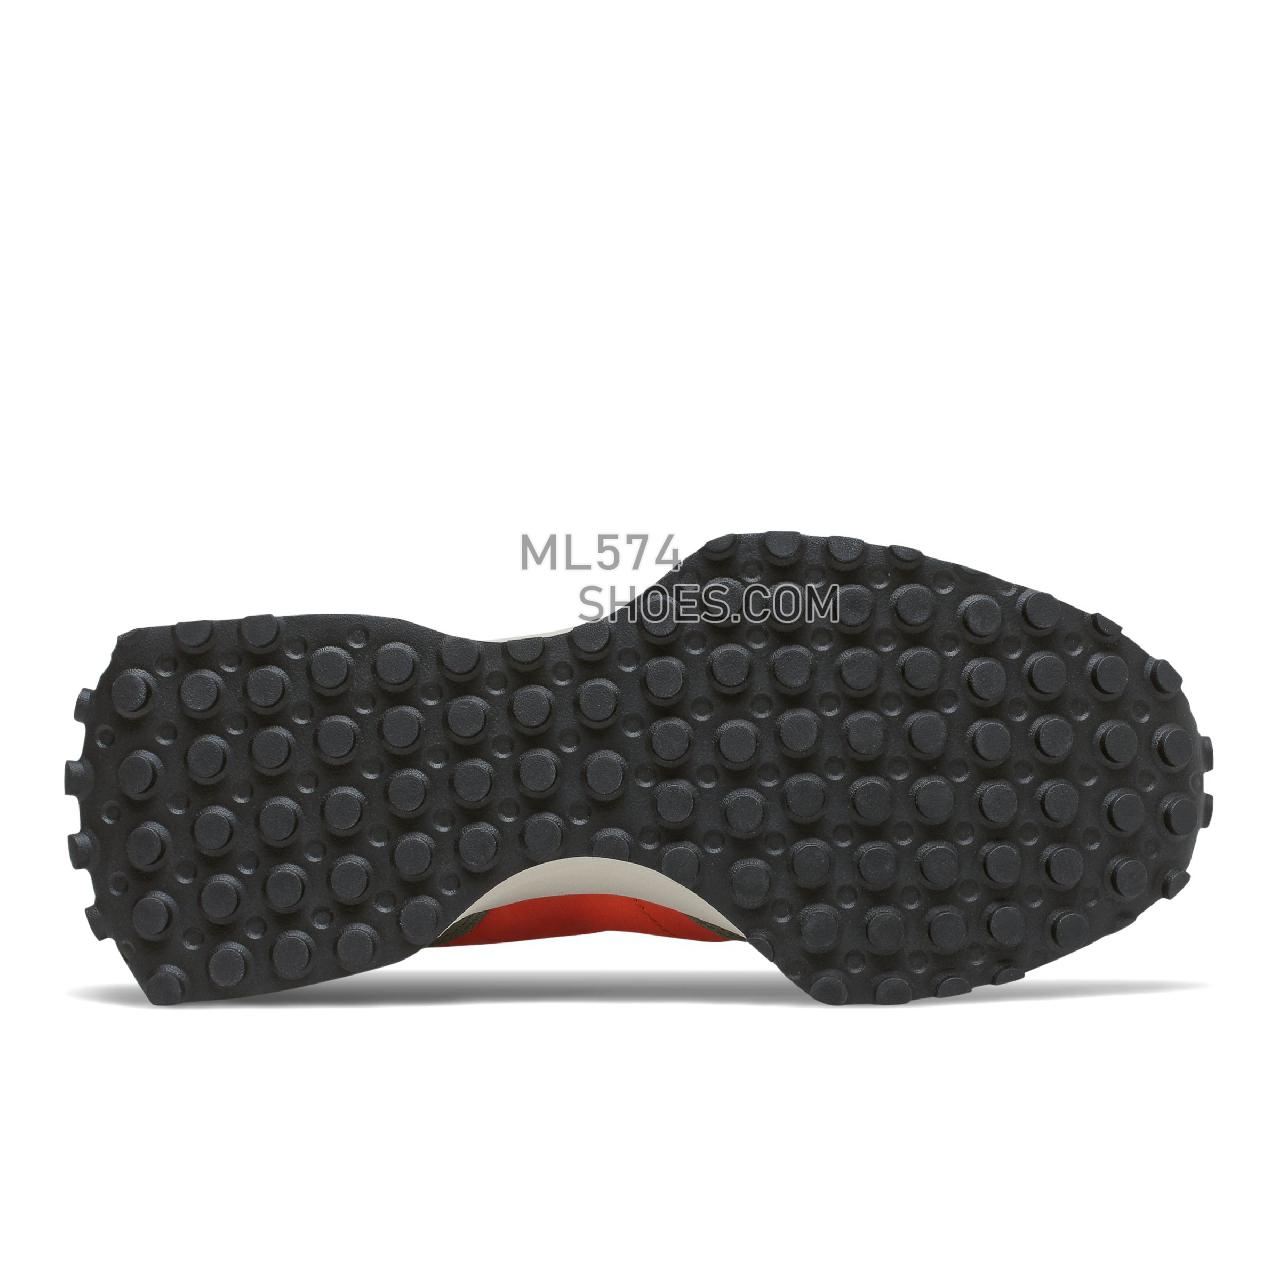 New Balance 327 - Men's Sport Style Sneakers - Dark Blaze with Natural Indigo - MS327TB